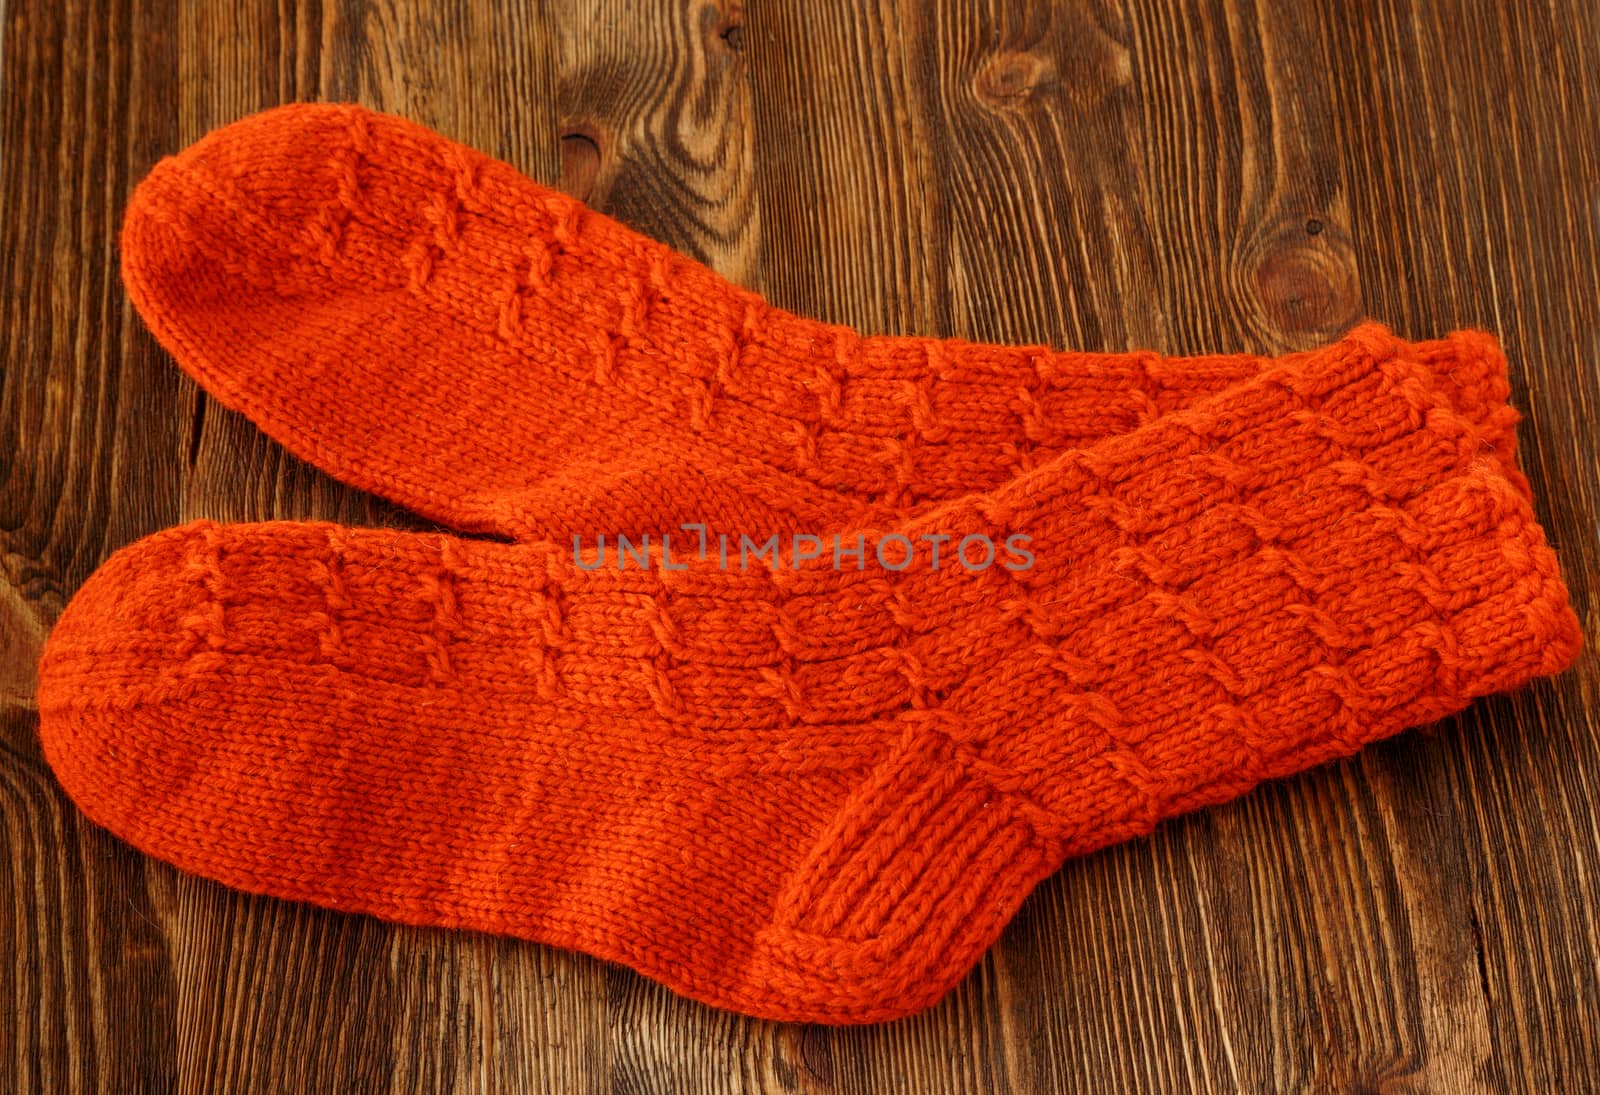 wool orange socks on a brown wooden background